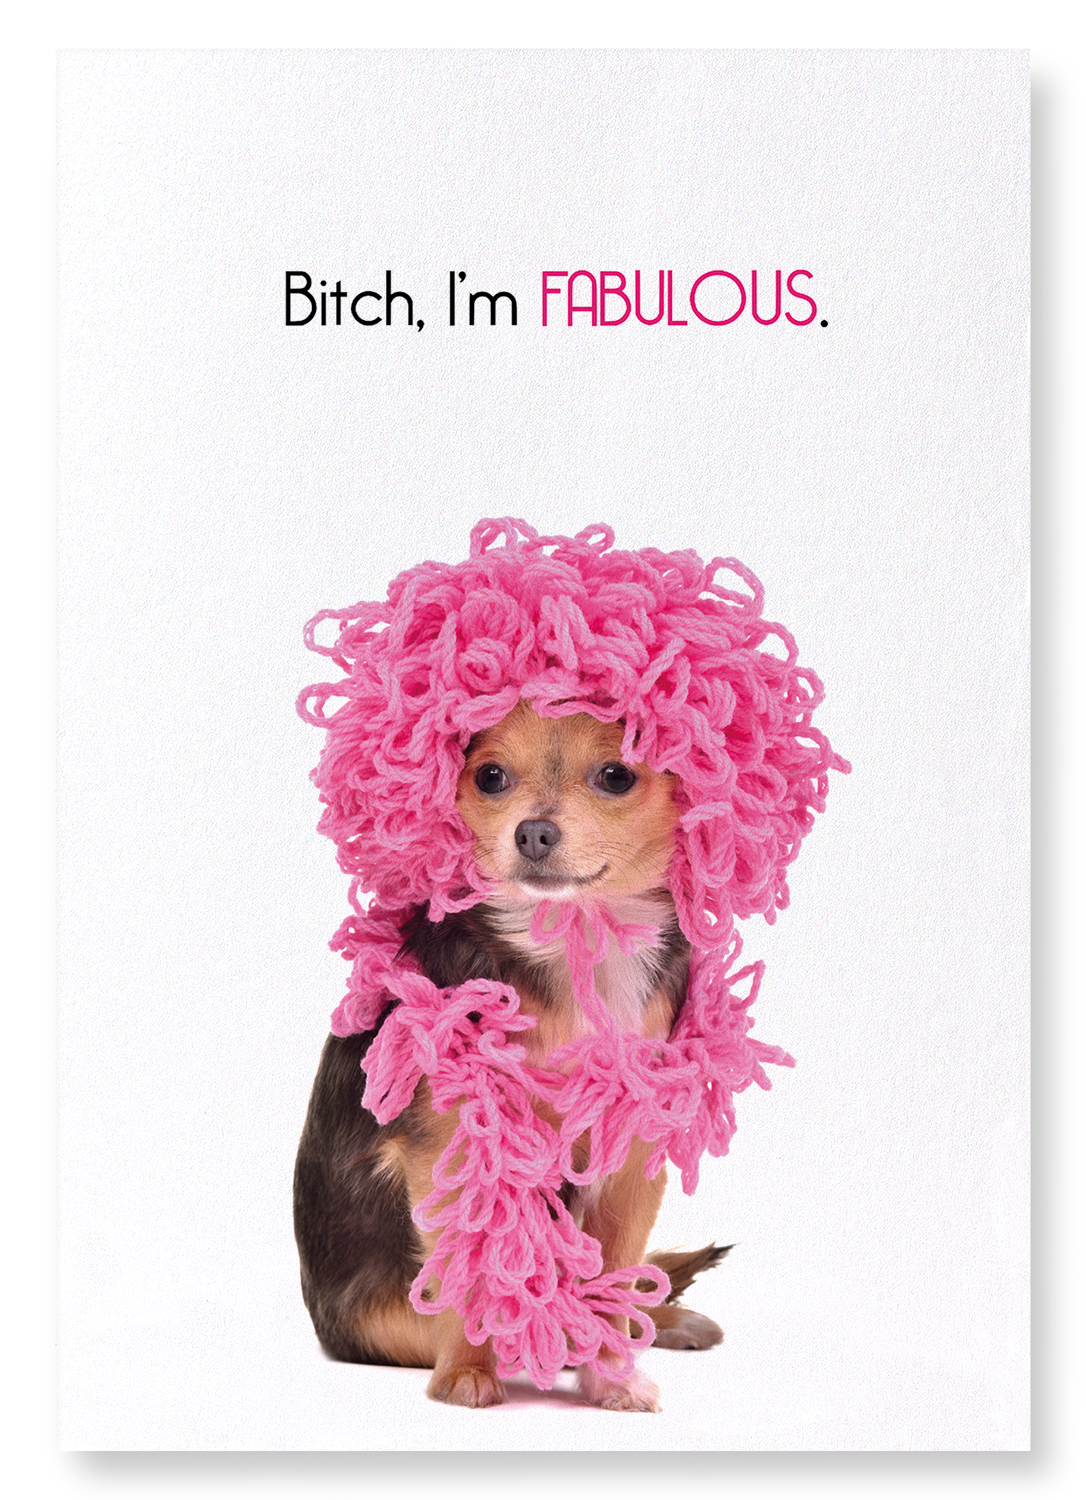 BITCH, I'M FABULOUS: Funny Animal Art print